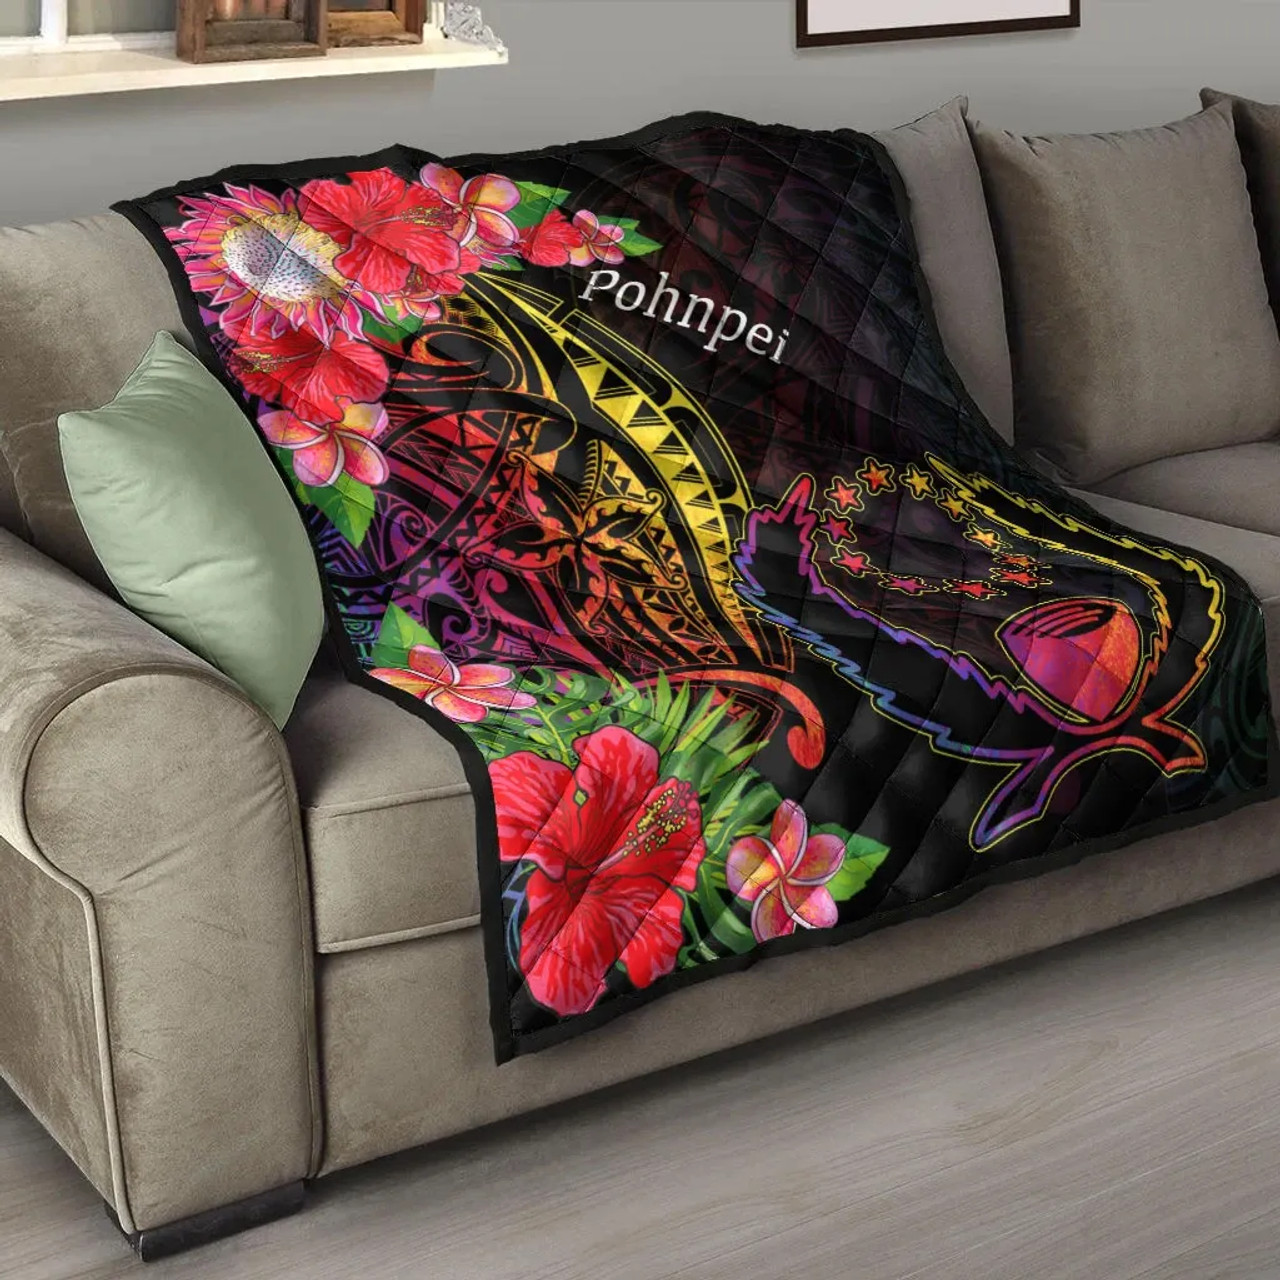 Pohnpei Premium Quilt - Tropical Hippie Style 9